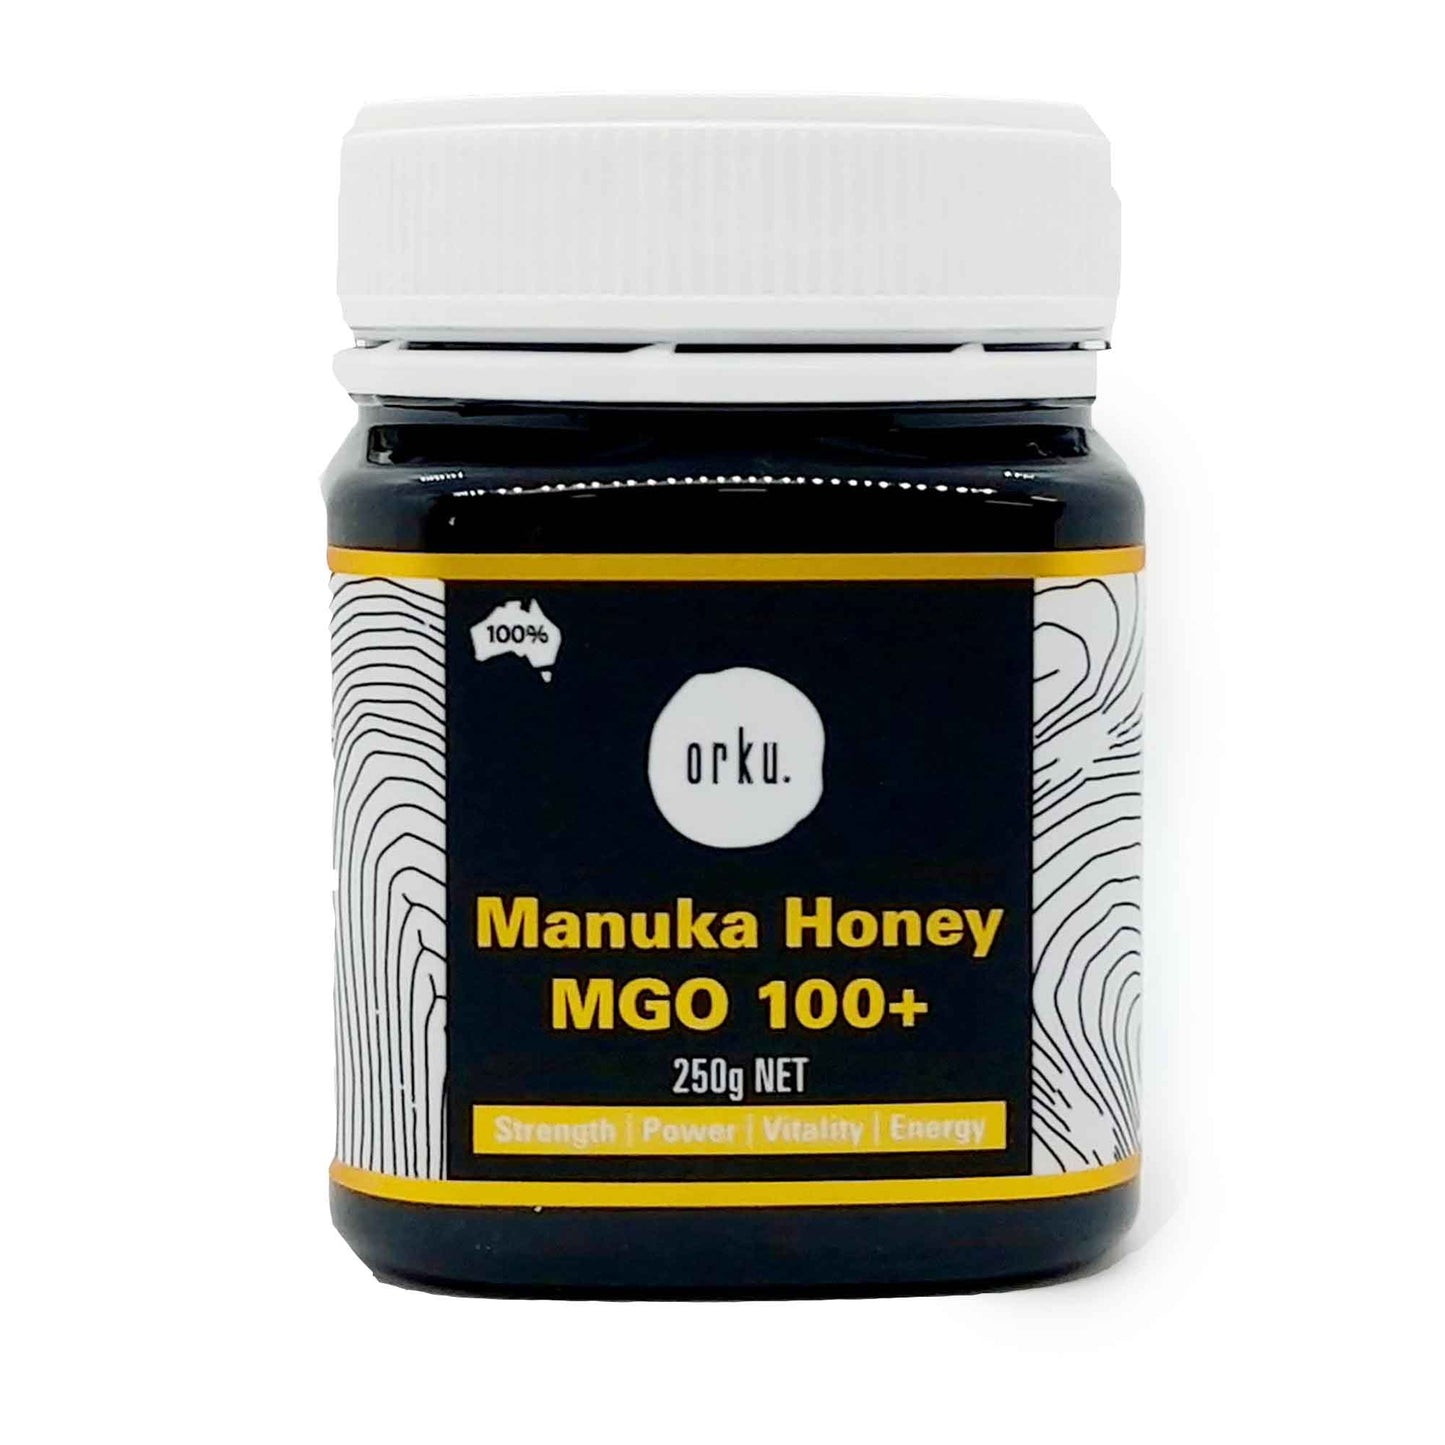 250g MGO 100+ Australian Manuka Honey - 100% Raw Natural Pure Jelly Bush